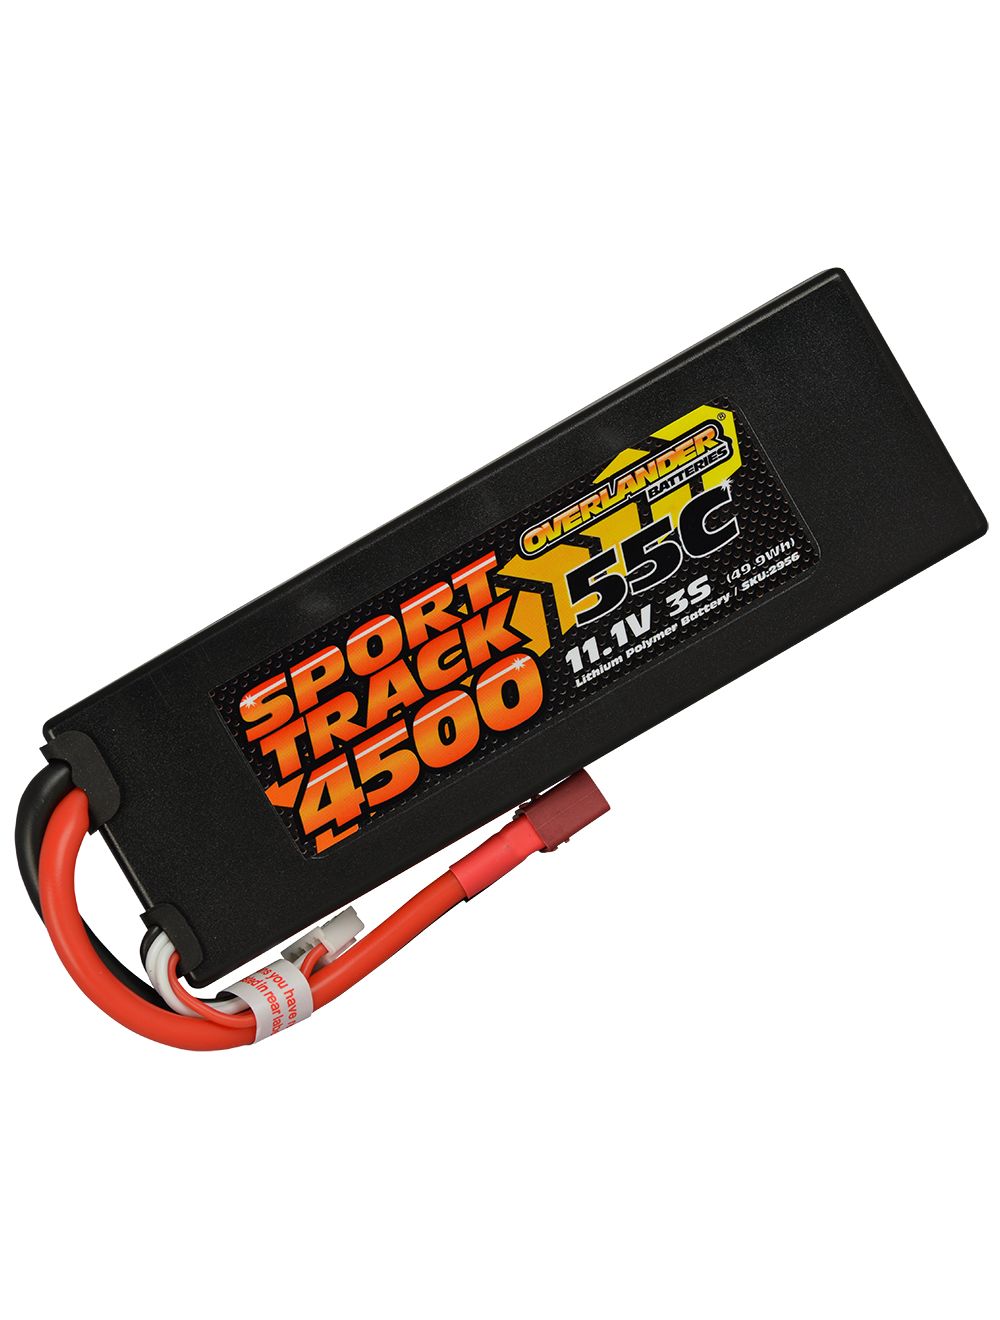 Overlander 4500mAh 11.1V 3S 55C Hard Case Sport Track LiPo Battery - XT90 Connector 2956